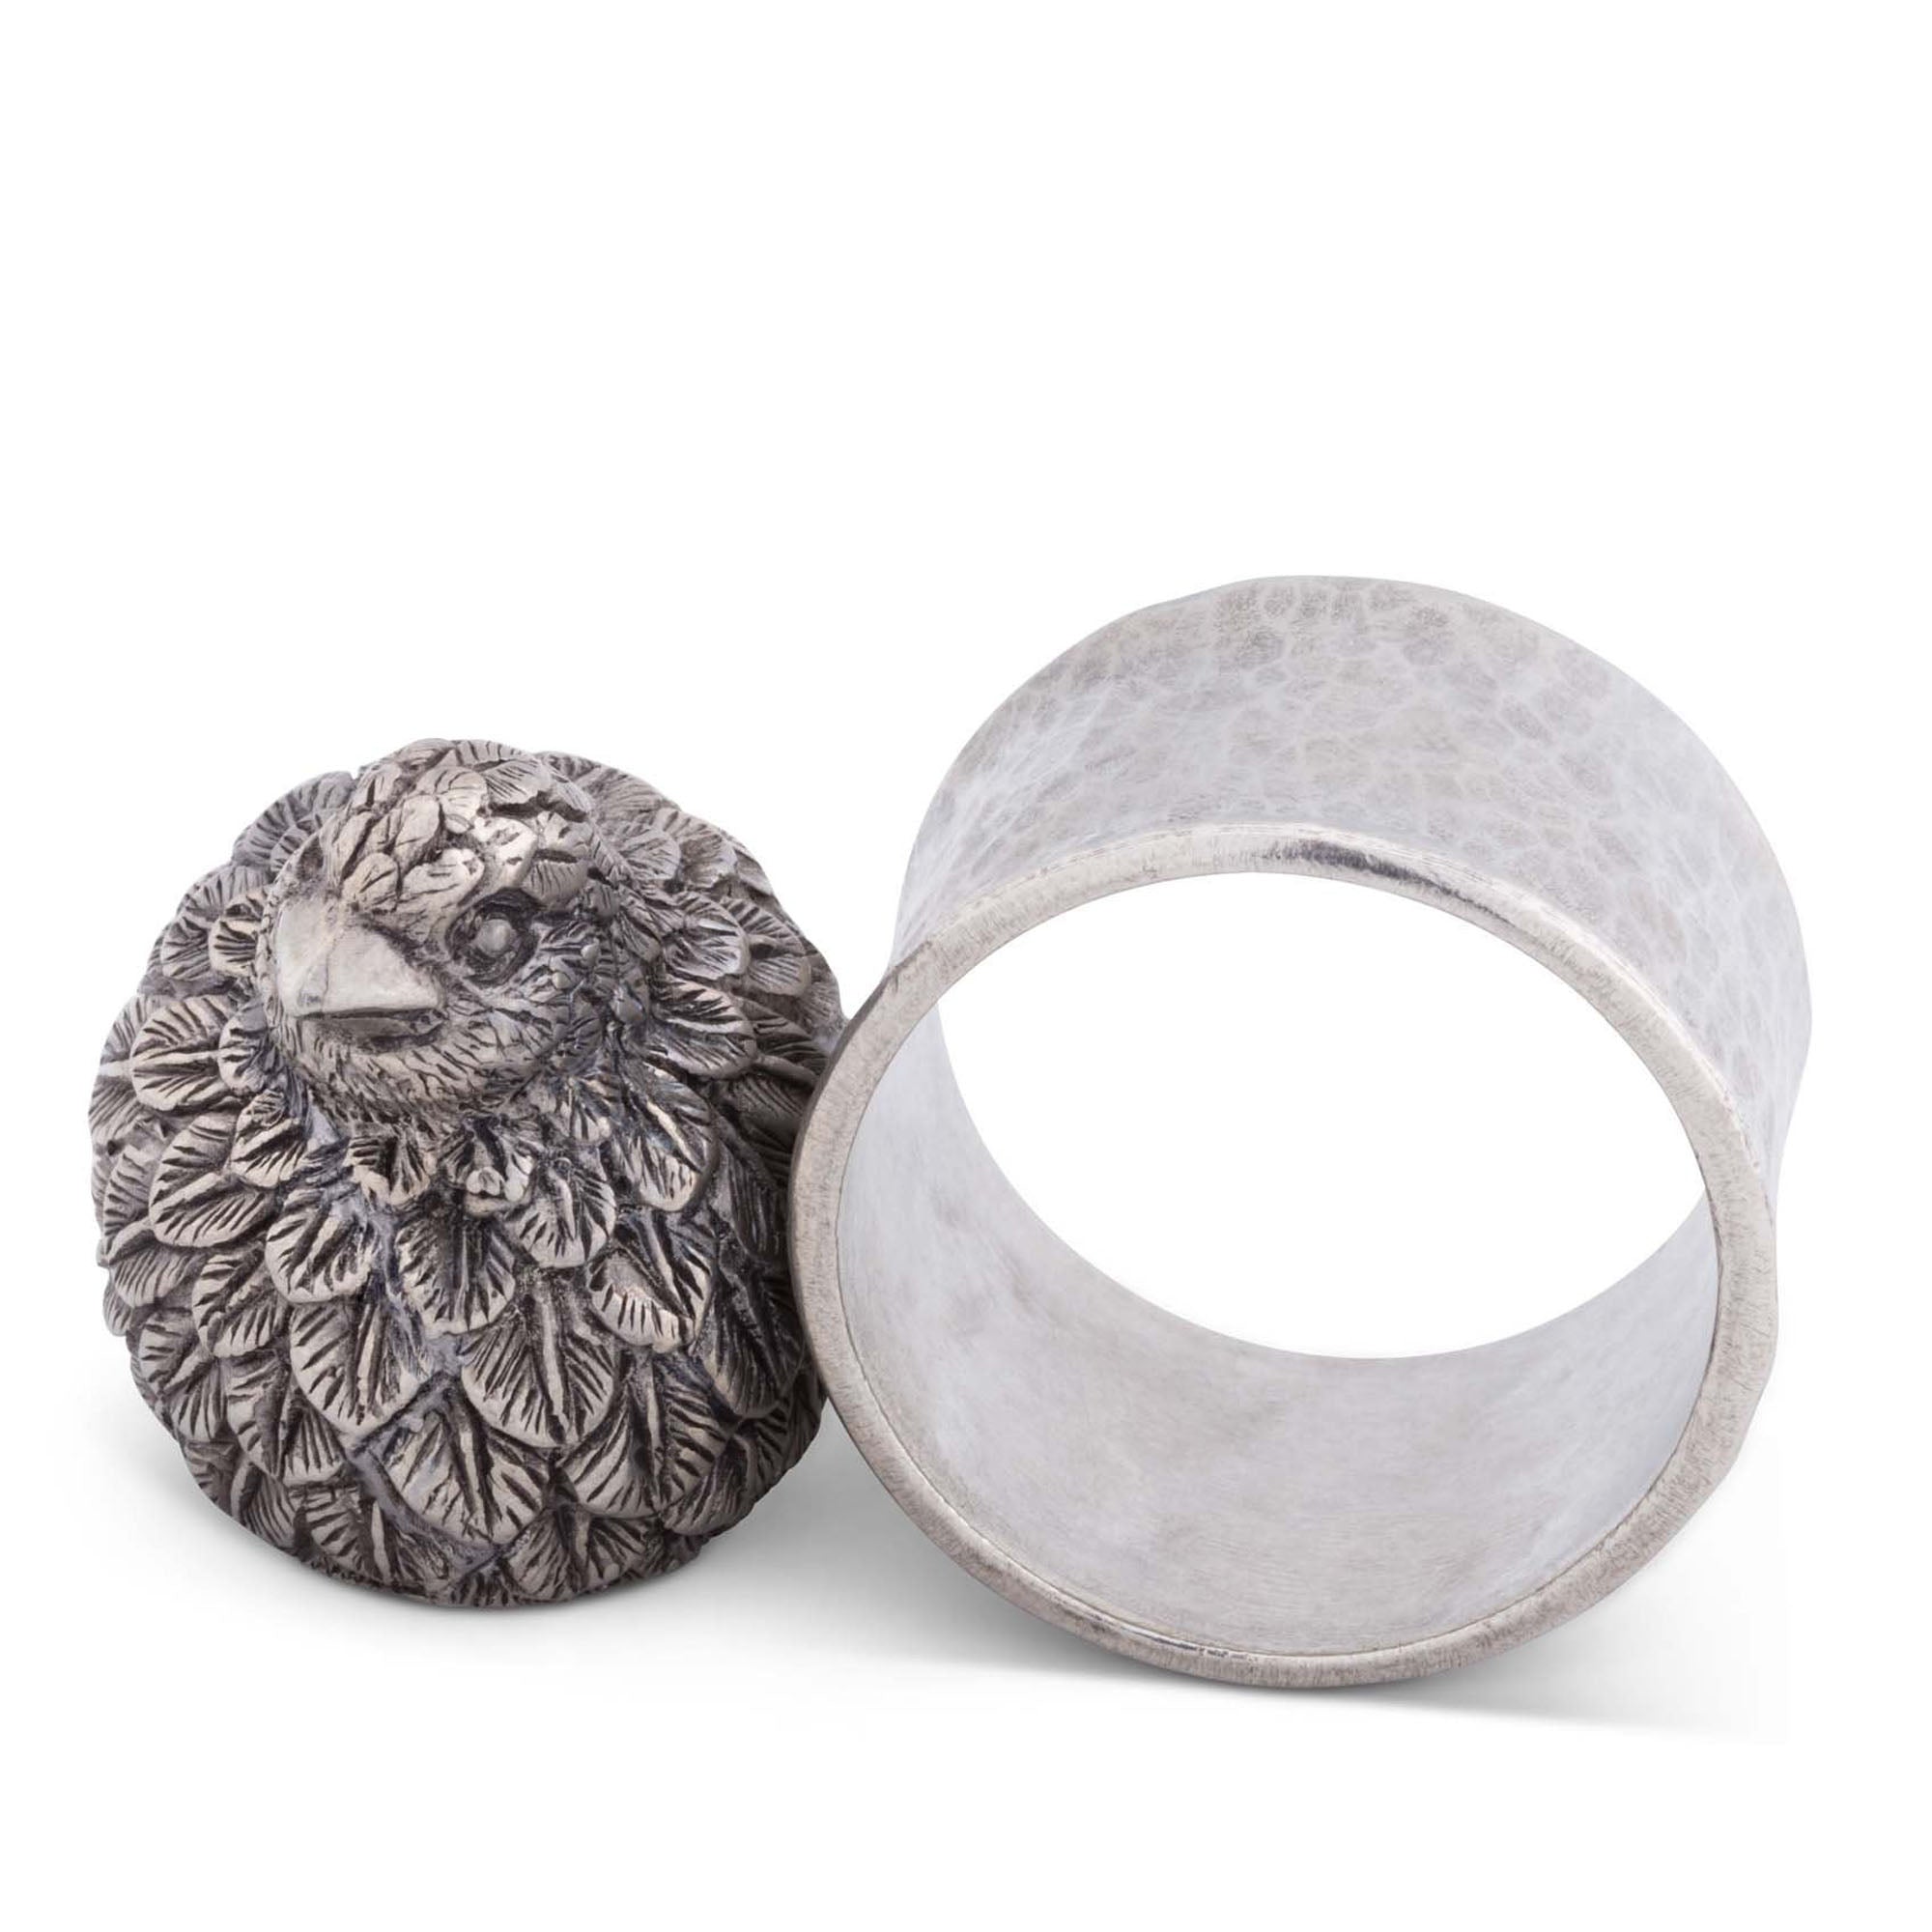 Vagabond House Quail Napkin Ring Product Image